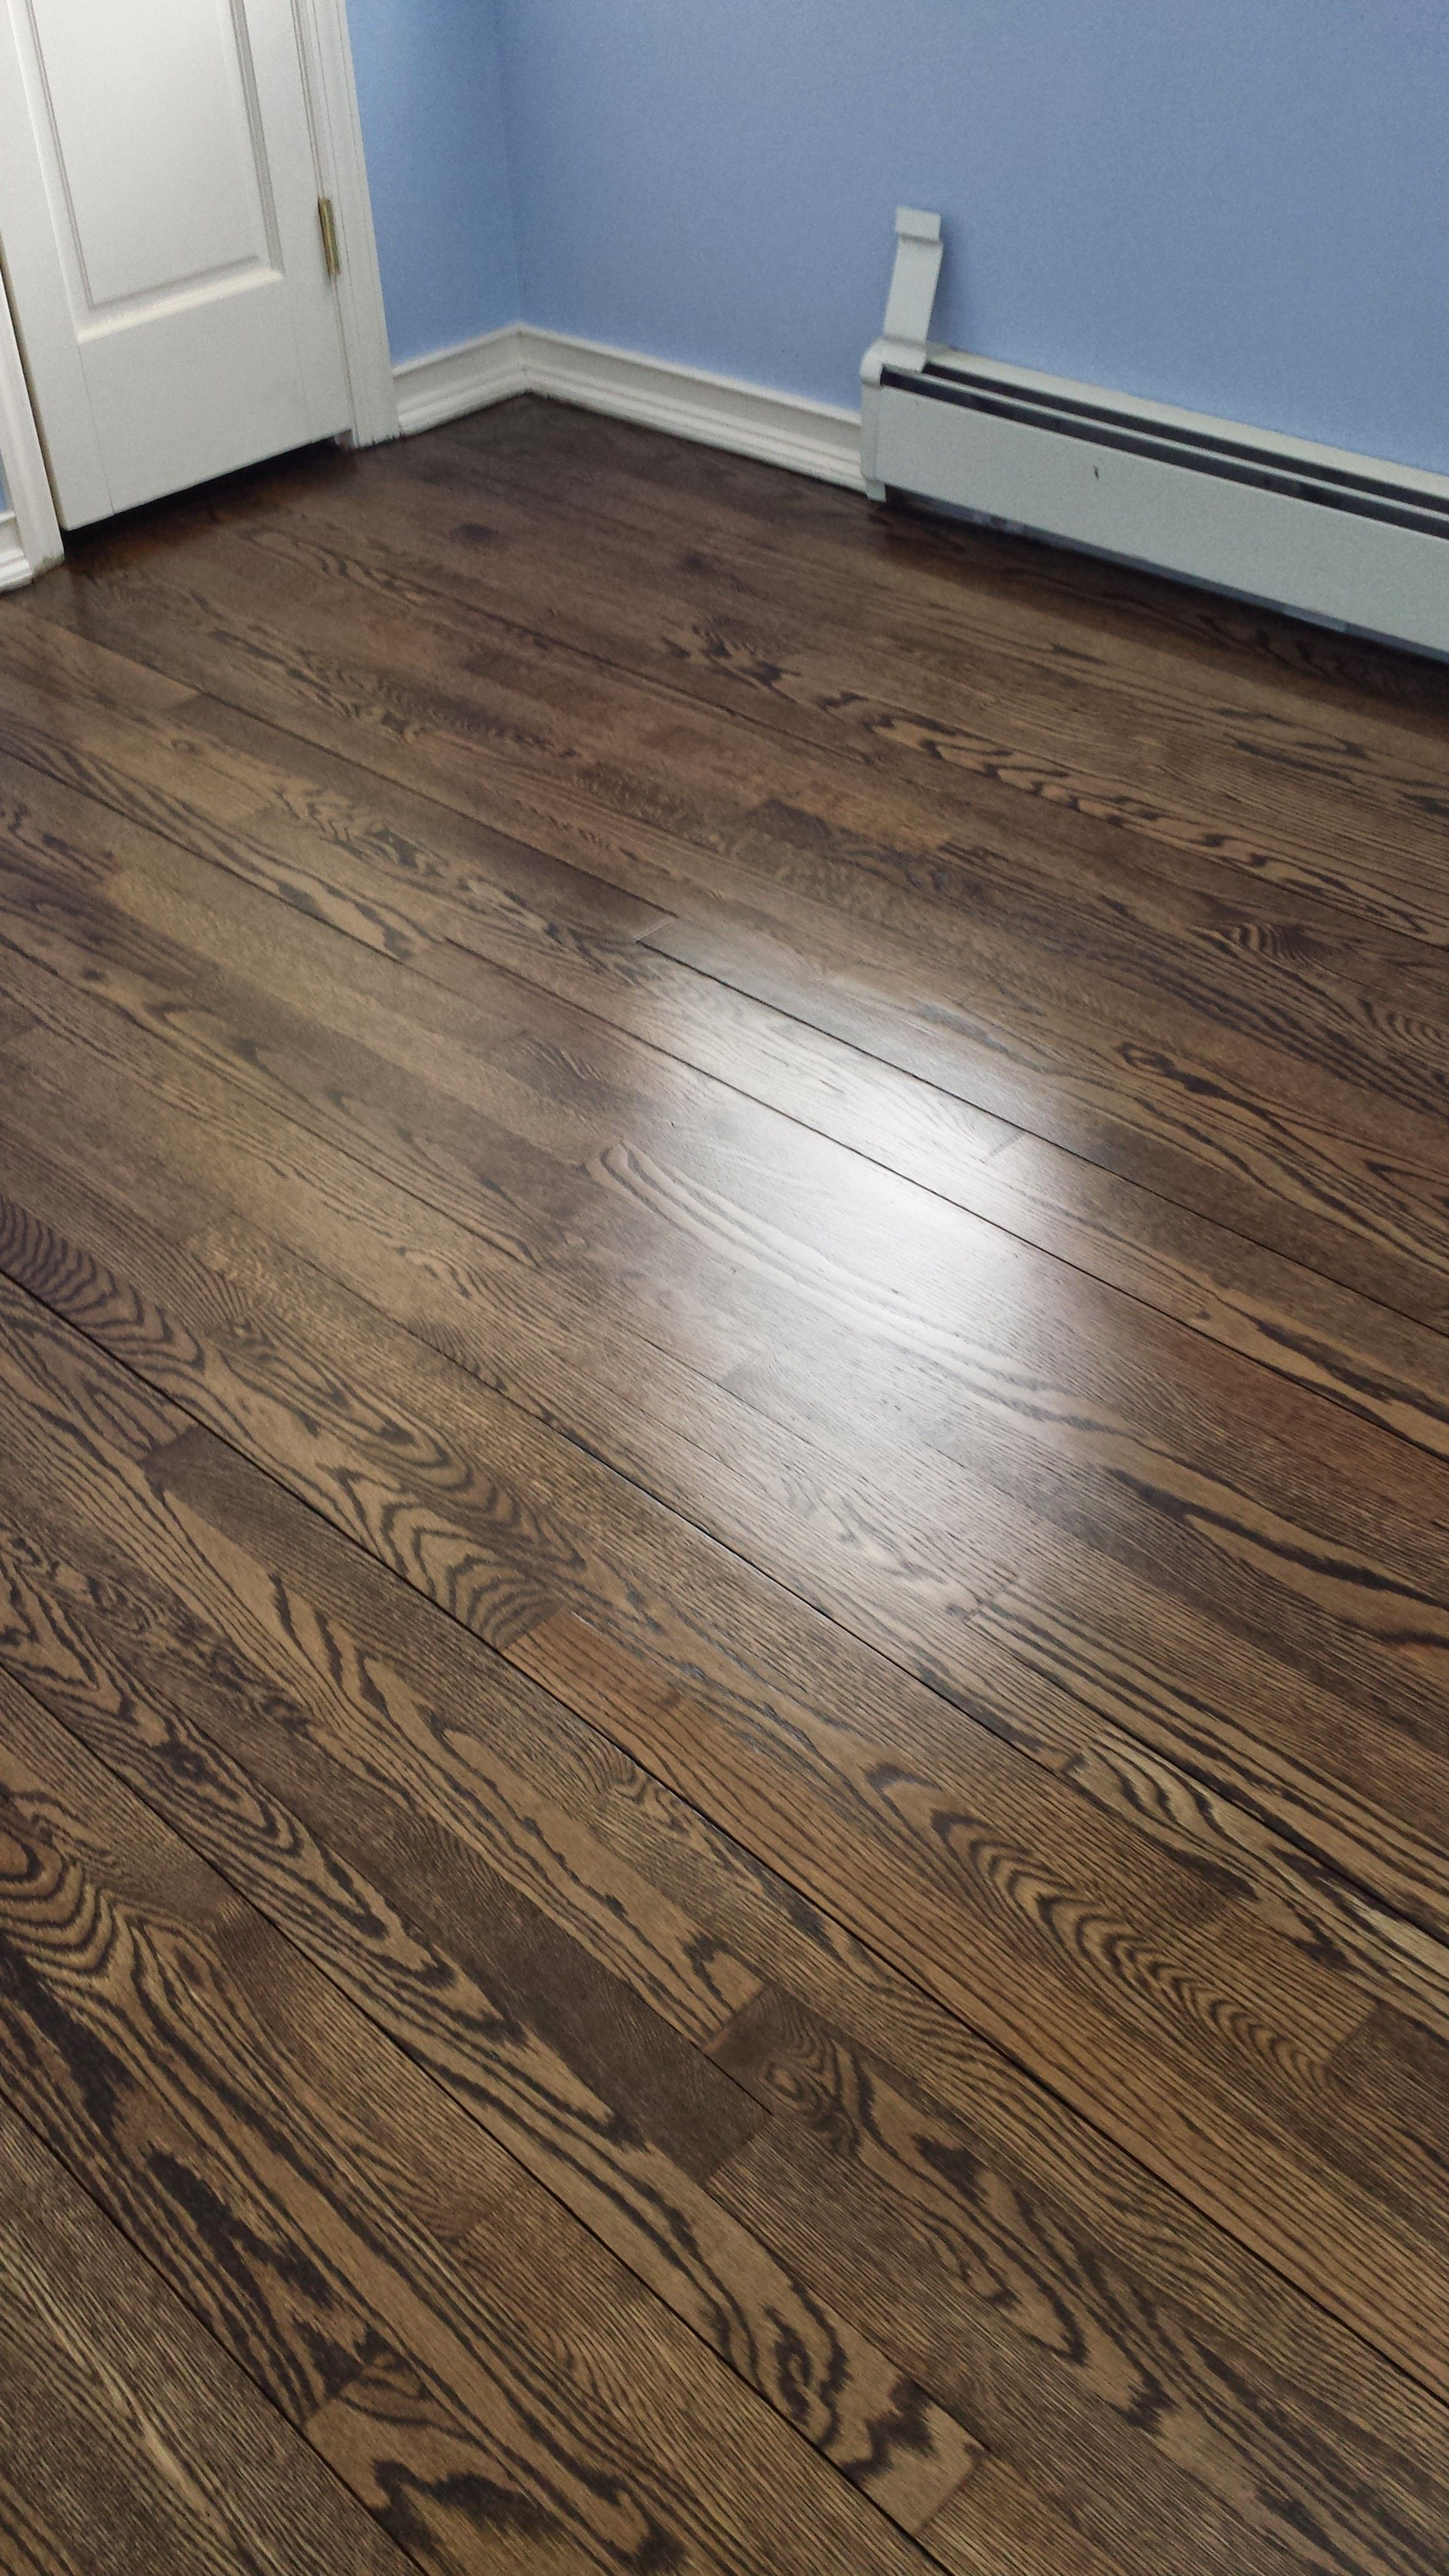 Hardwood Floor Transition to Closet Of Wood Floor Refinishing Service Adventures In Staining My Red Oak for Wood Floor Refinishing Service Great Methods to Use for Refinishing Hardwood Floors